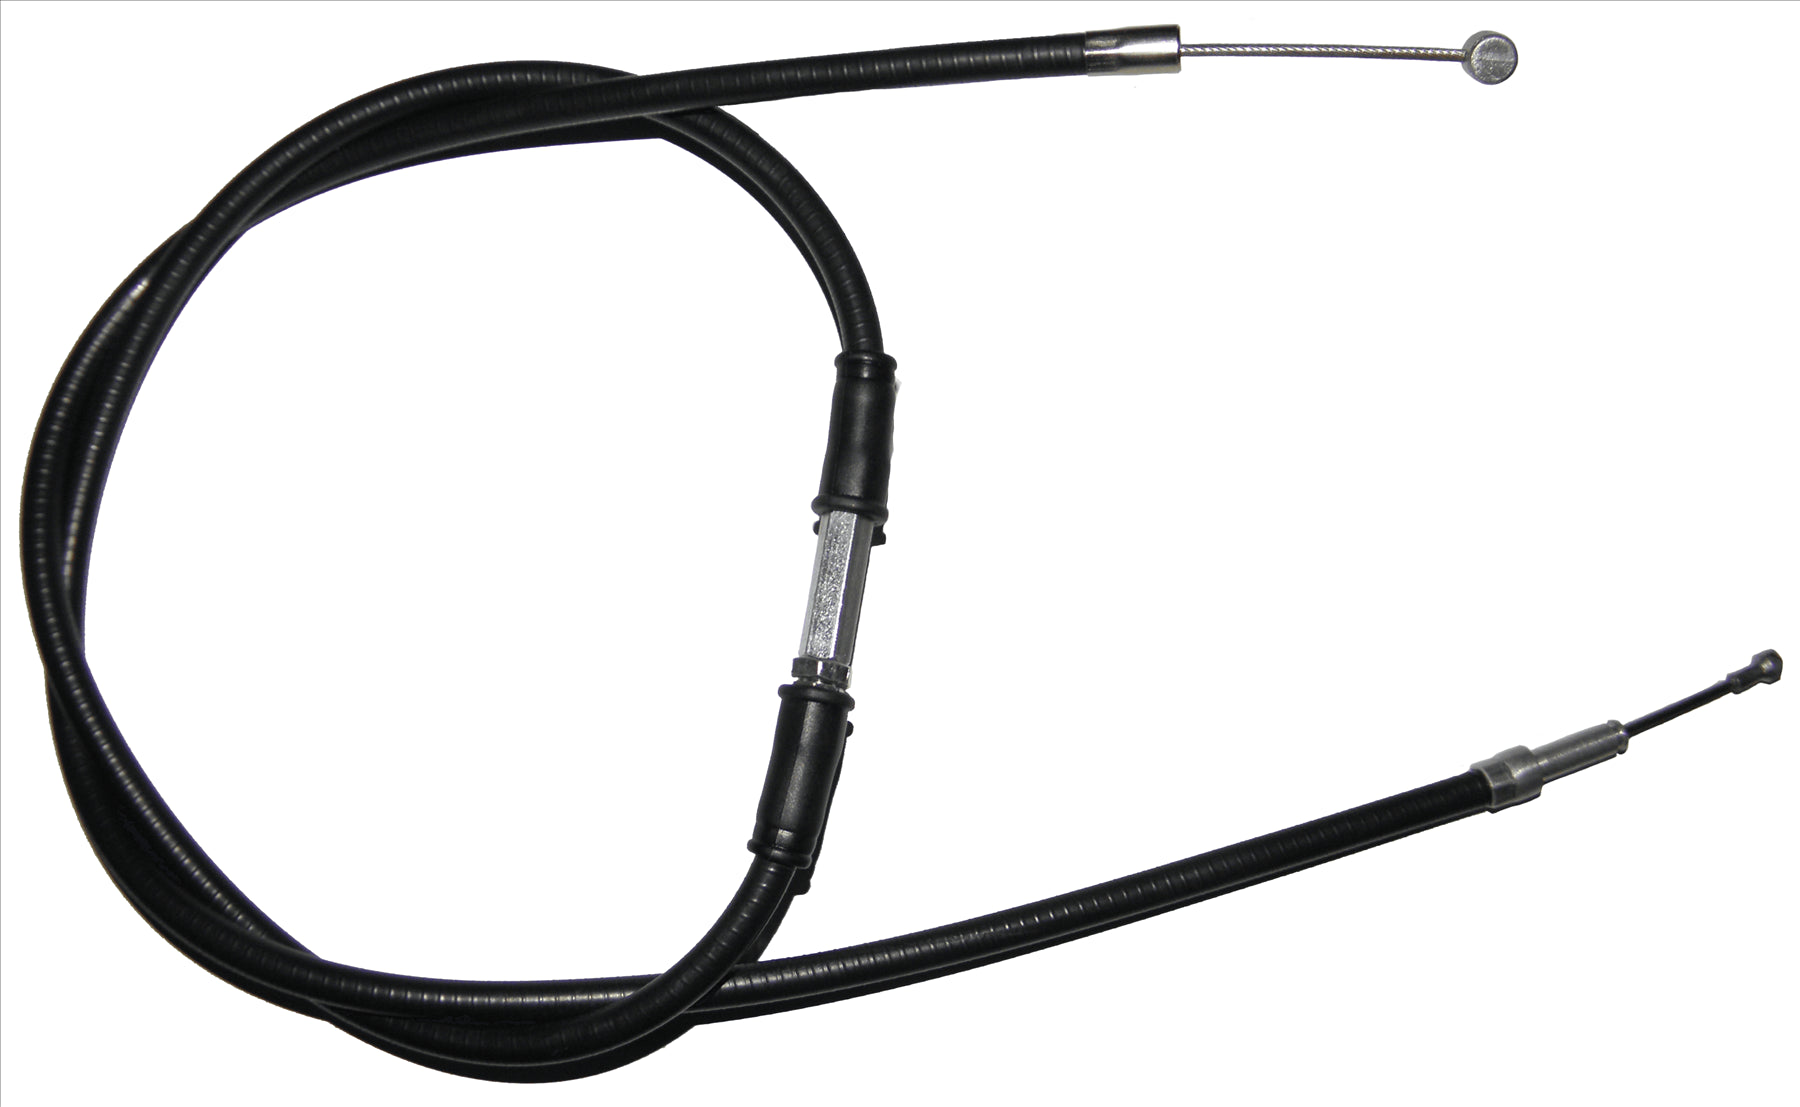 Apico Black Clutch Cable For Husqvarna CR 250 1994-2000